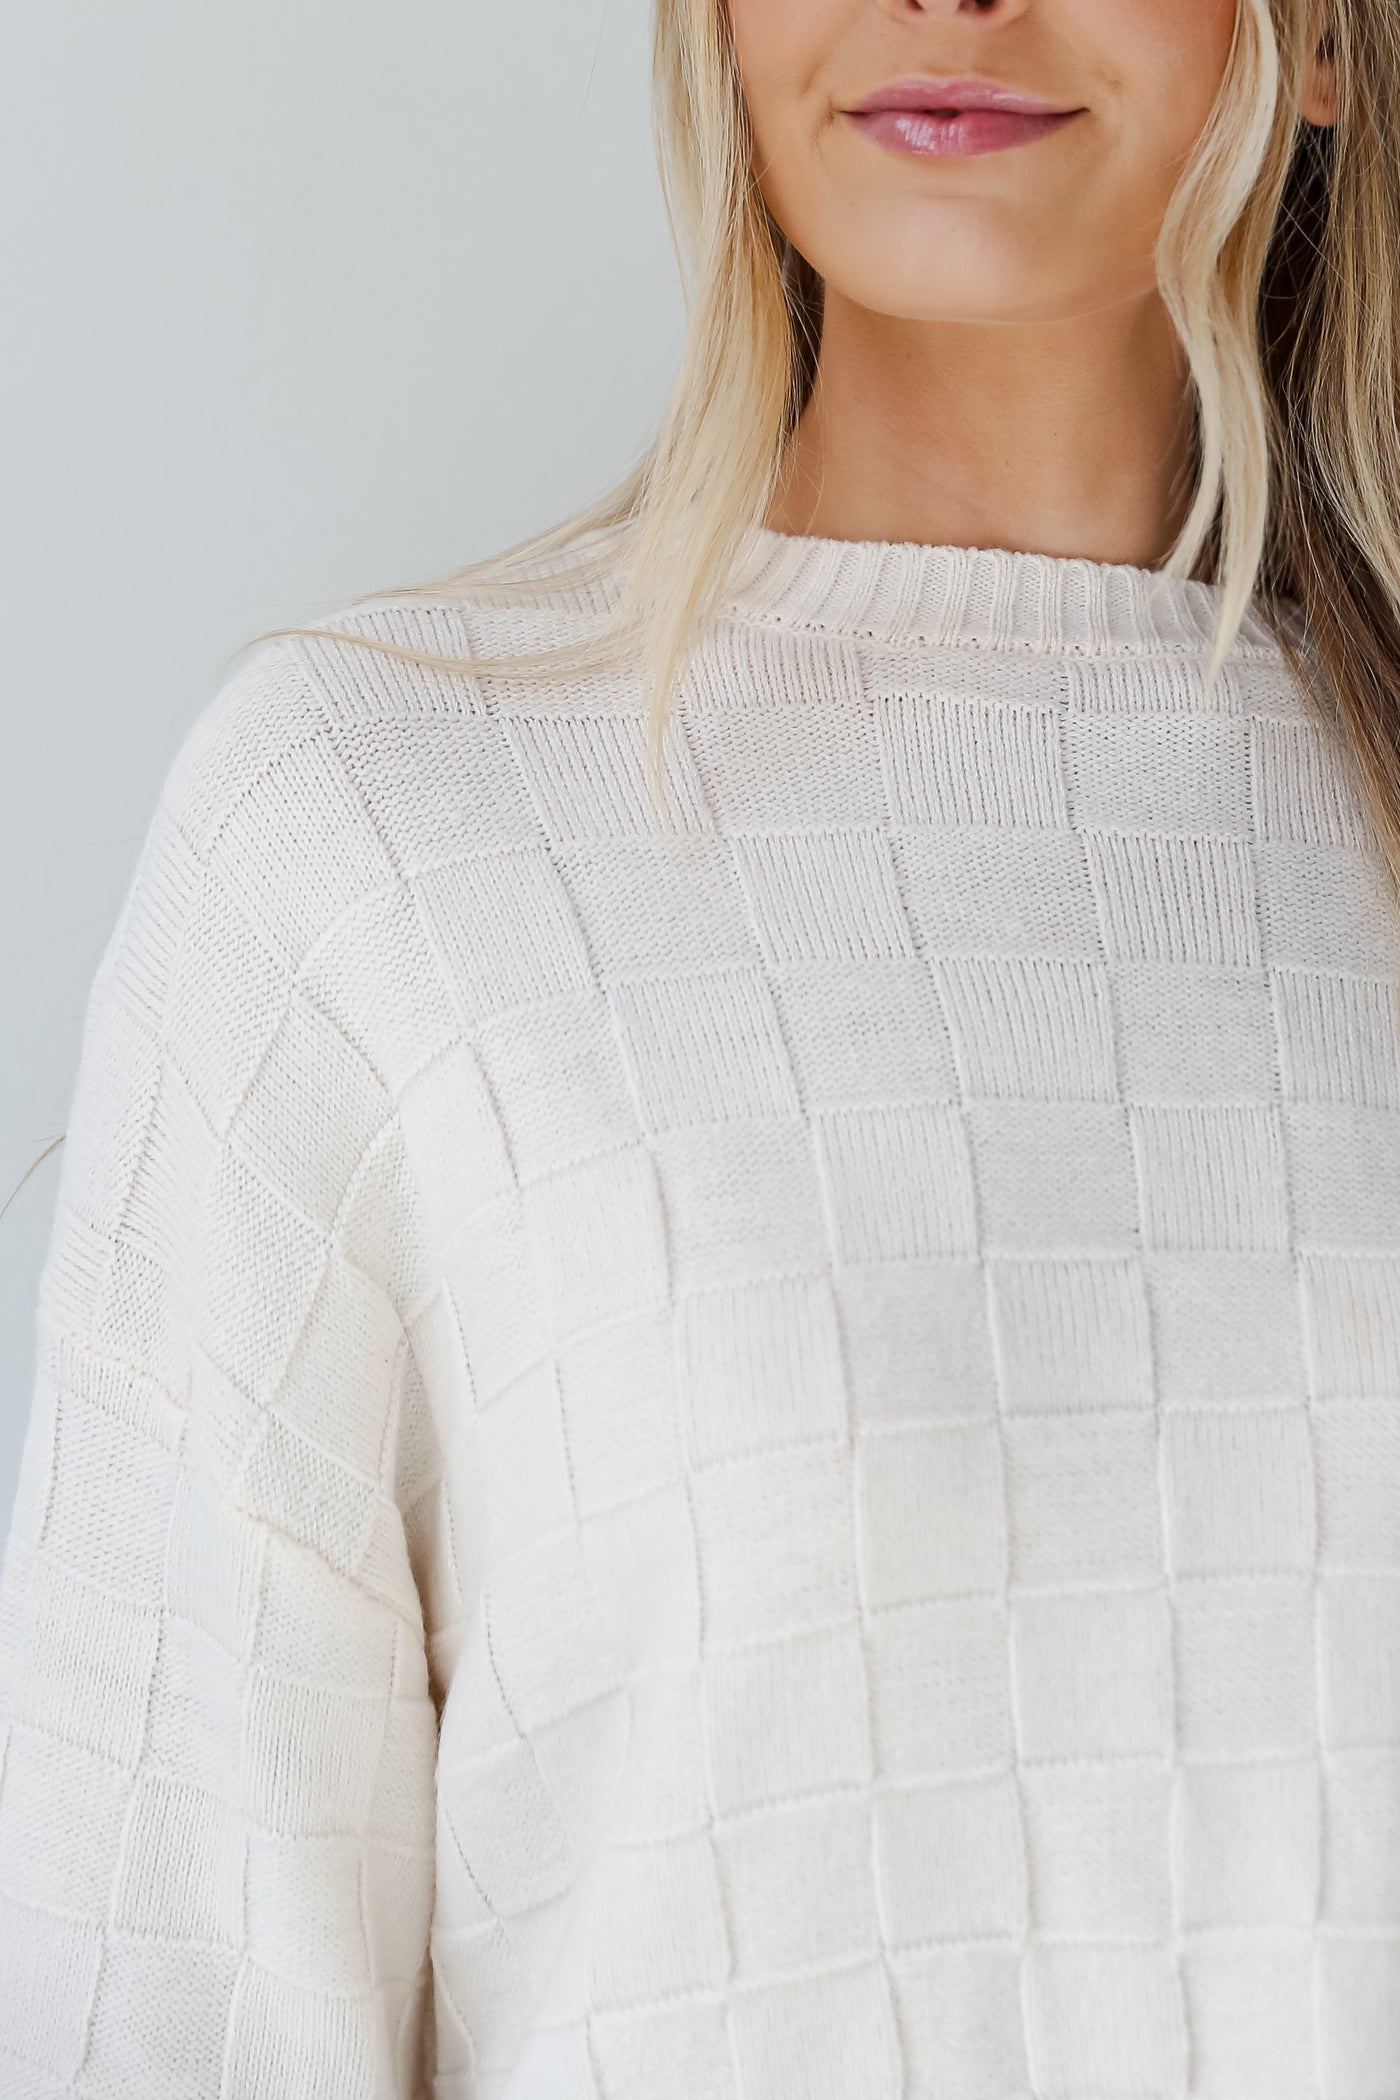 trendy sweaters for women